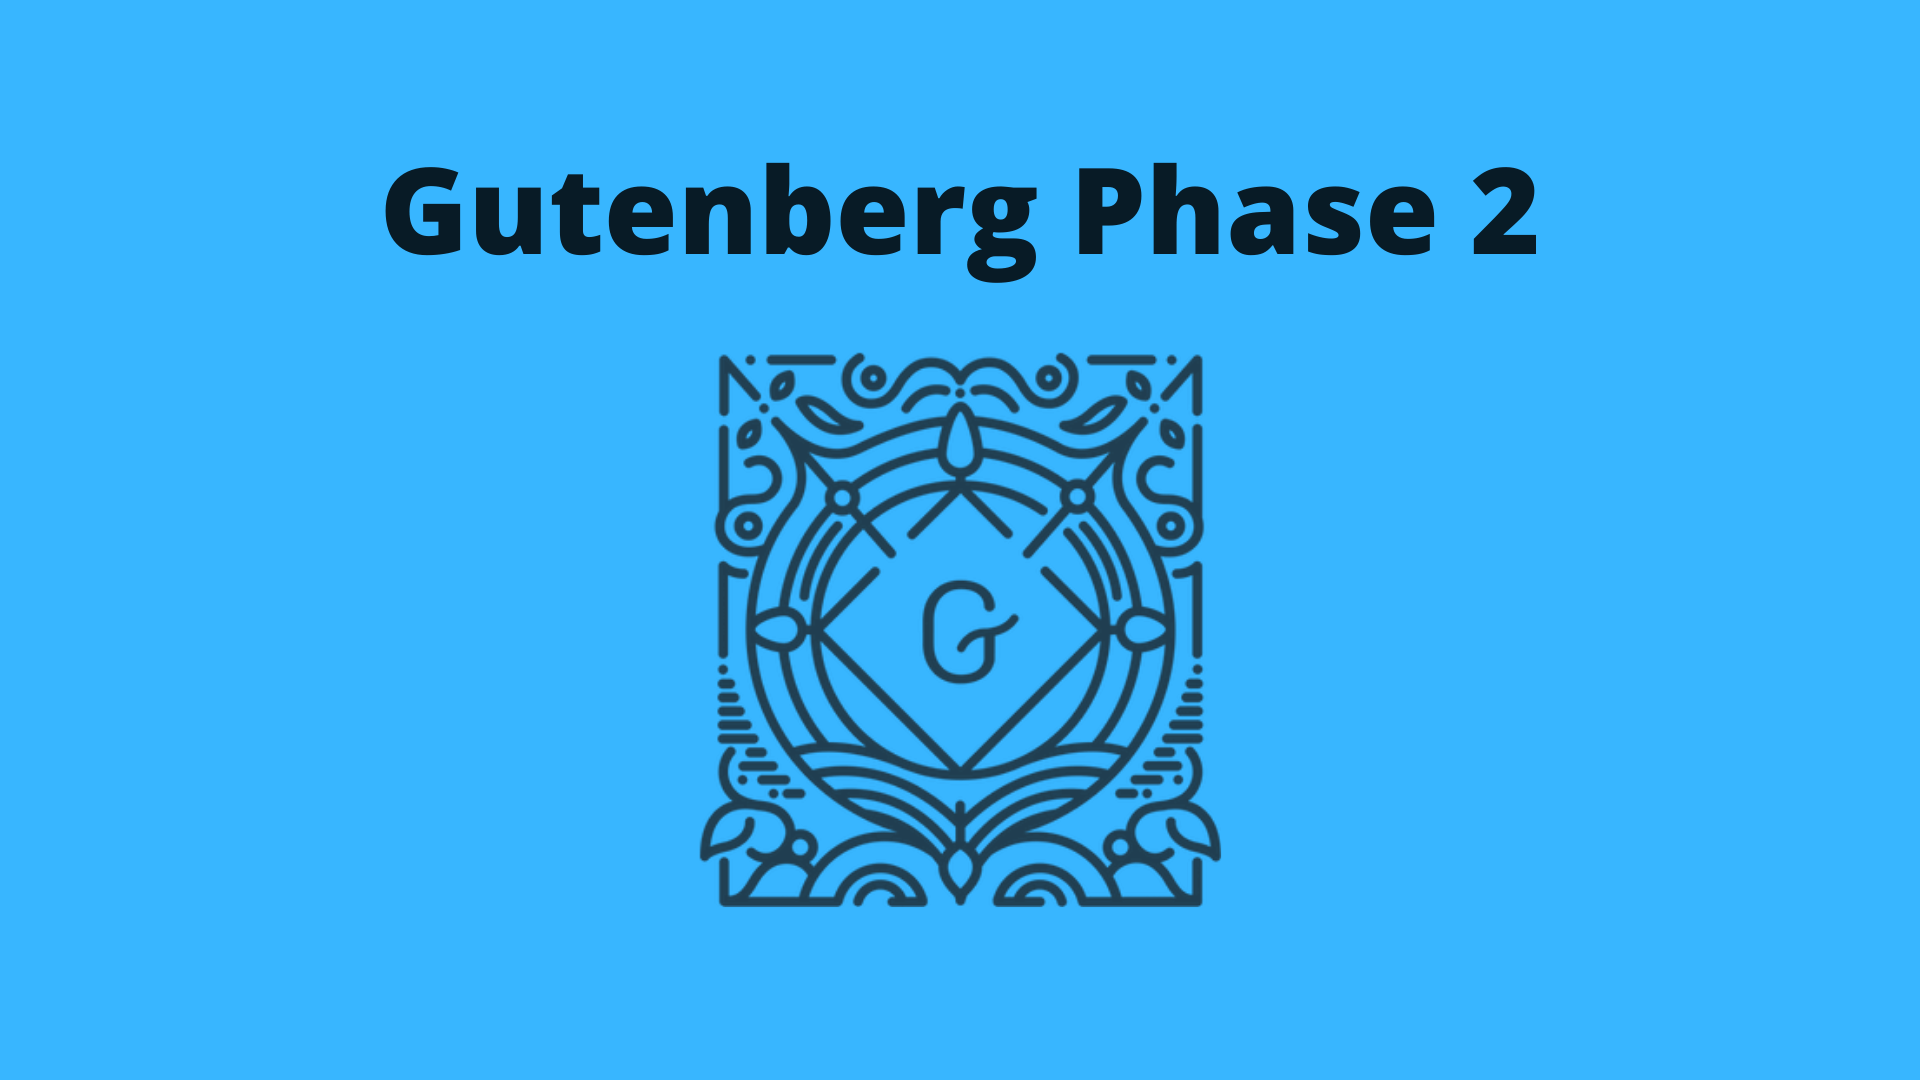 Brace Yourself! Gutenberg Phase 2 Has Started!